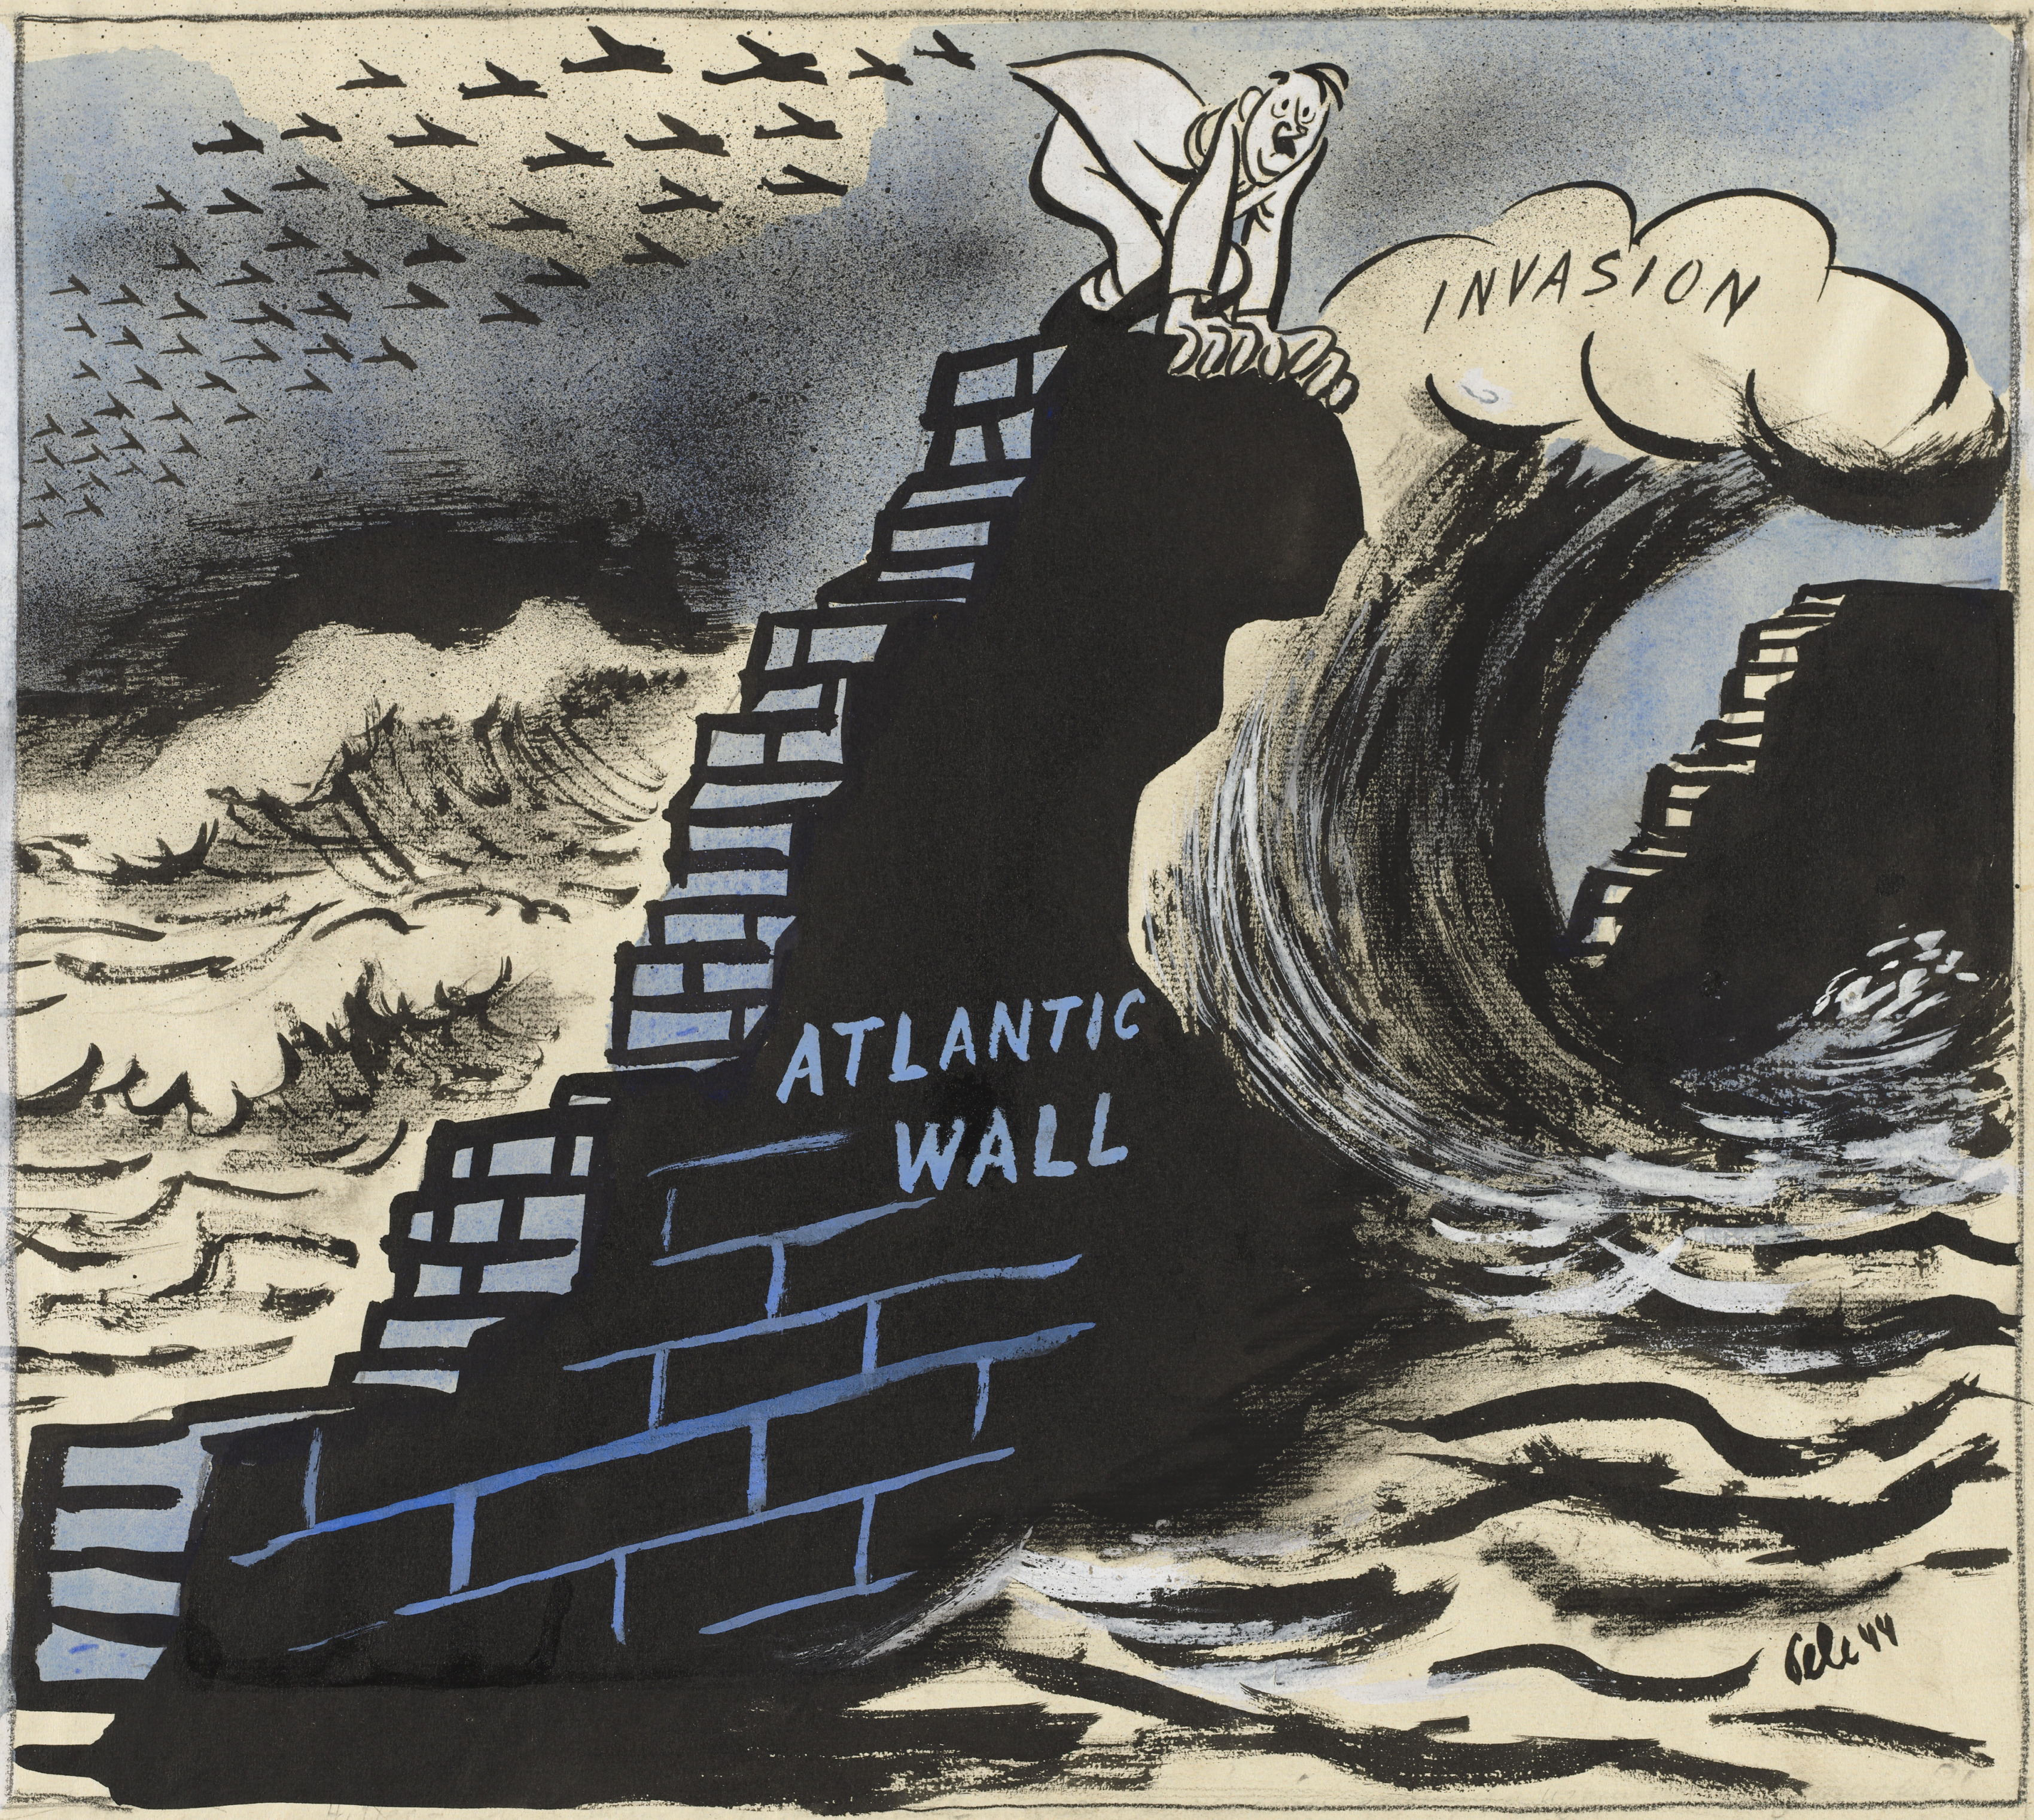 Atlantic Wall - Invasion